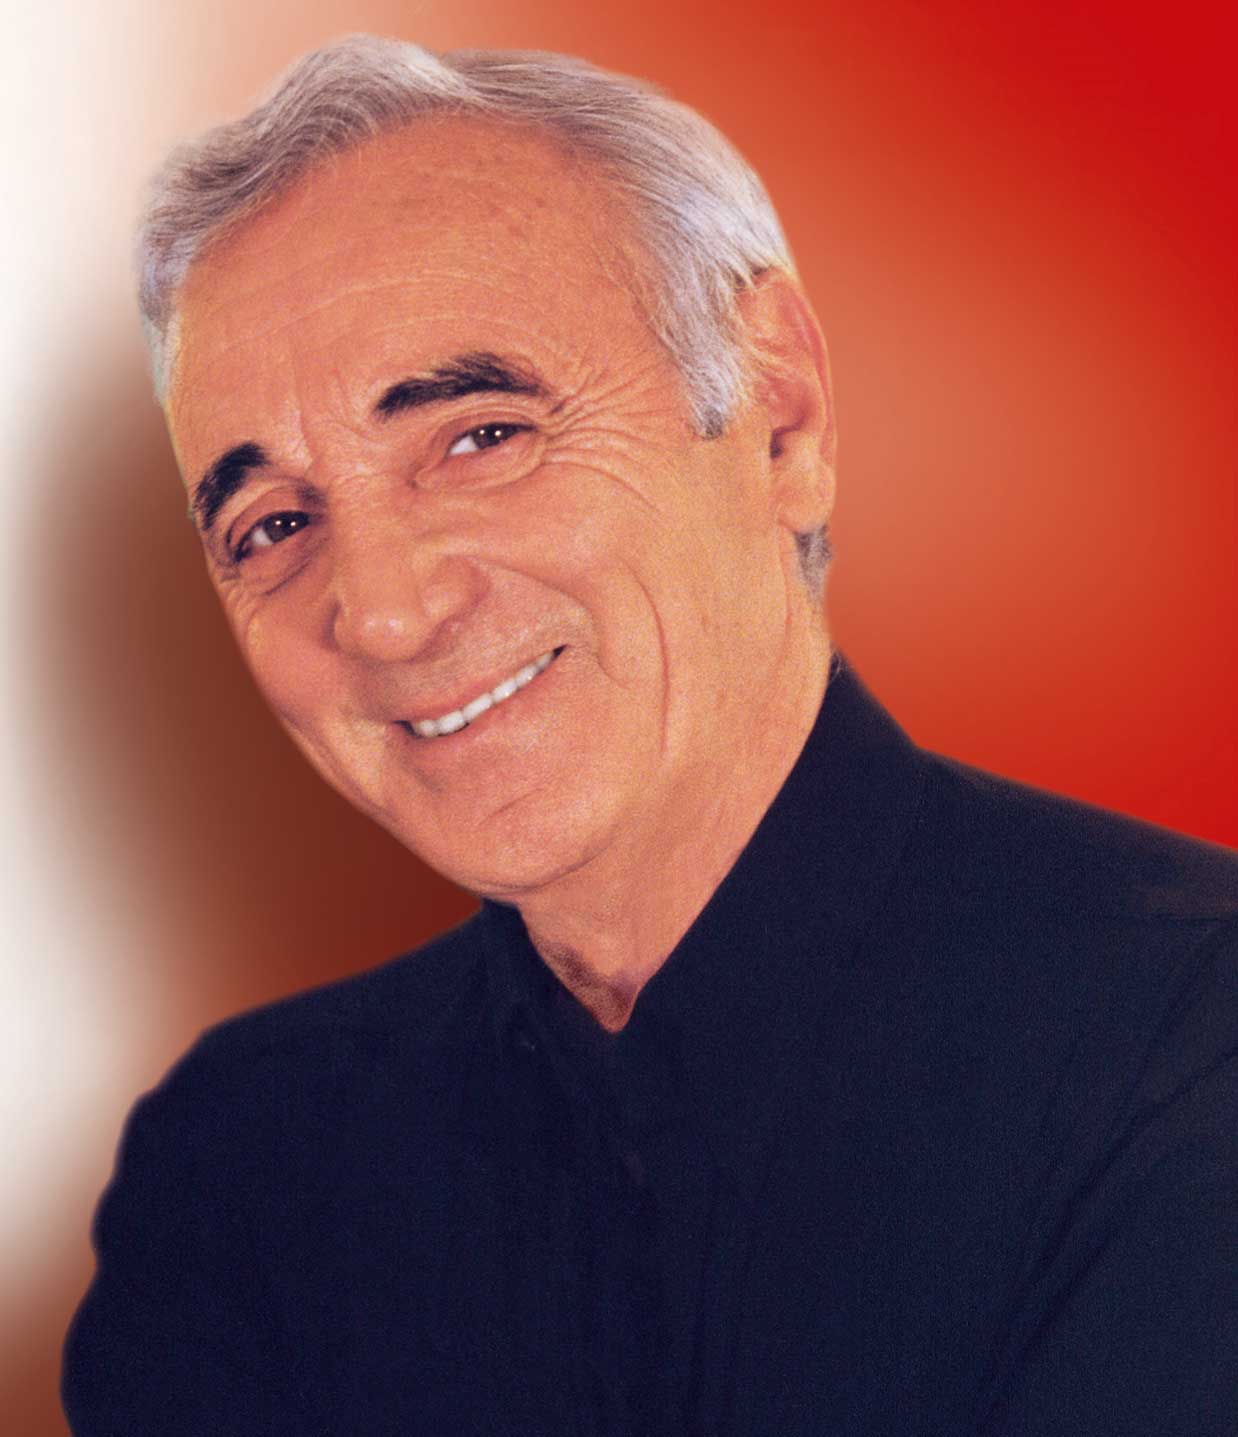 http://periodismoweb.files.wordpress.com/2009/07/aznavour.jpg